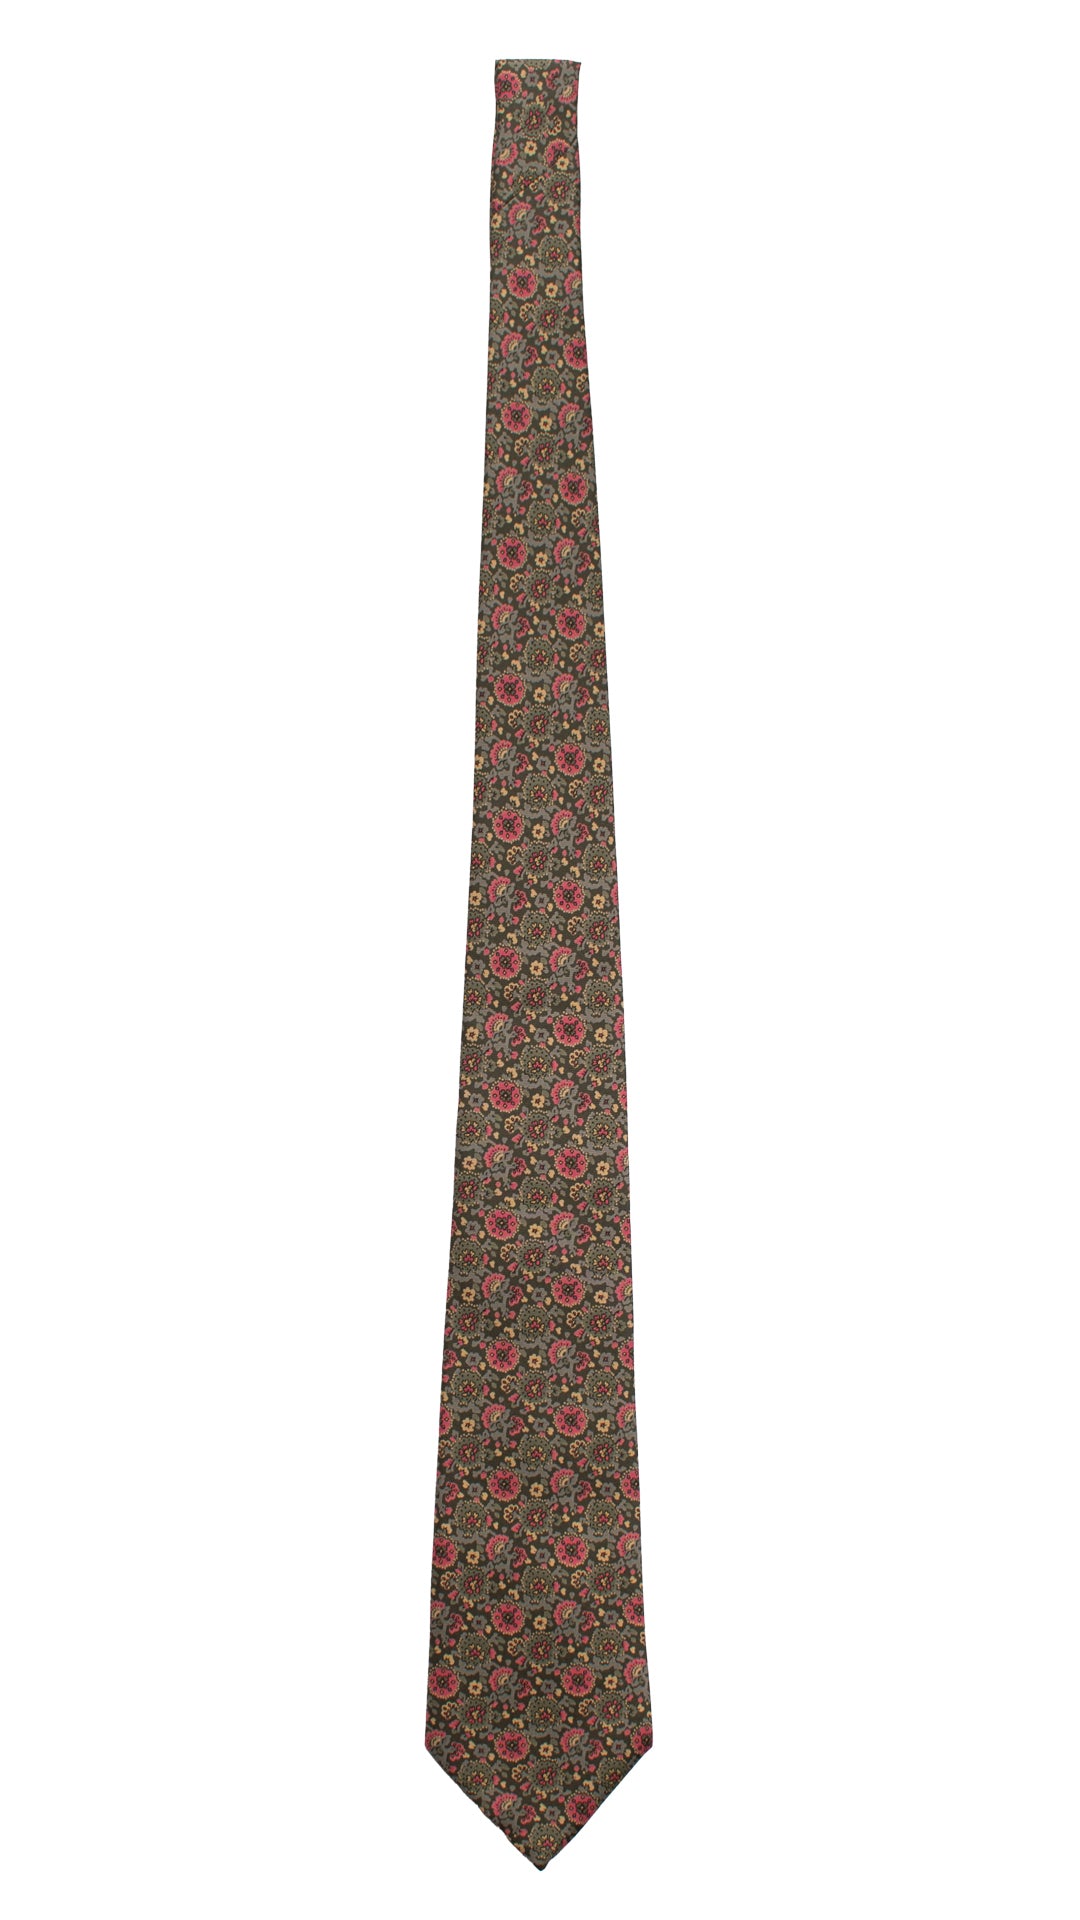 Cravatta Vintage in Twill di Seta Grigia A Fiori Magenta Grigi Beige CV767 Intera